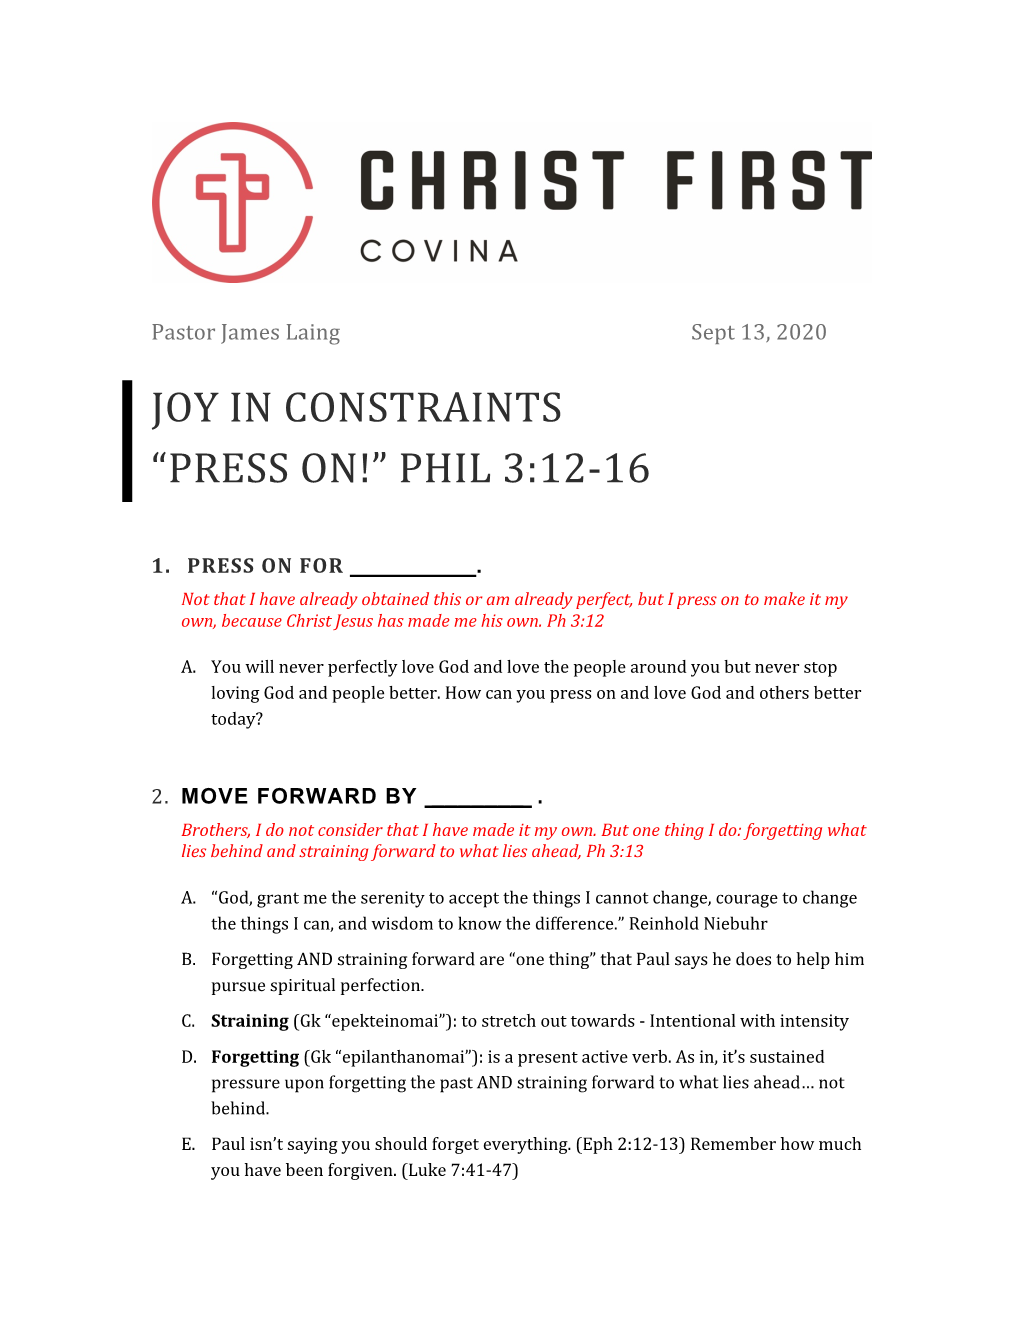 Joy in Constraints “Press On!” Phil 3:12-16